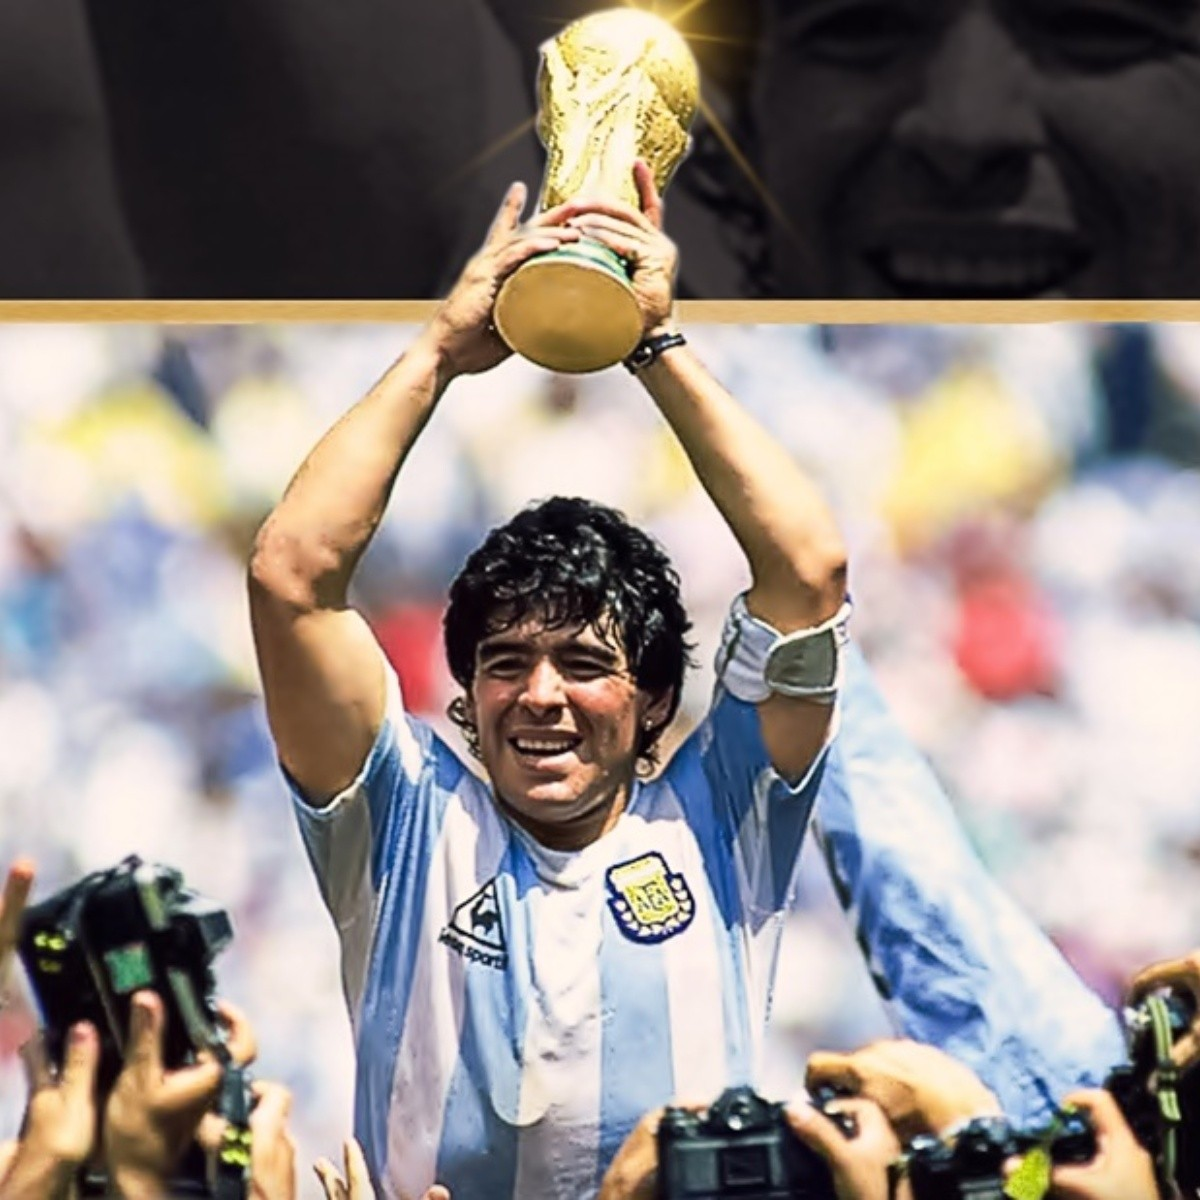 Maradona Hand of God jersey to be auctioned